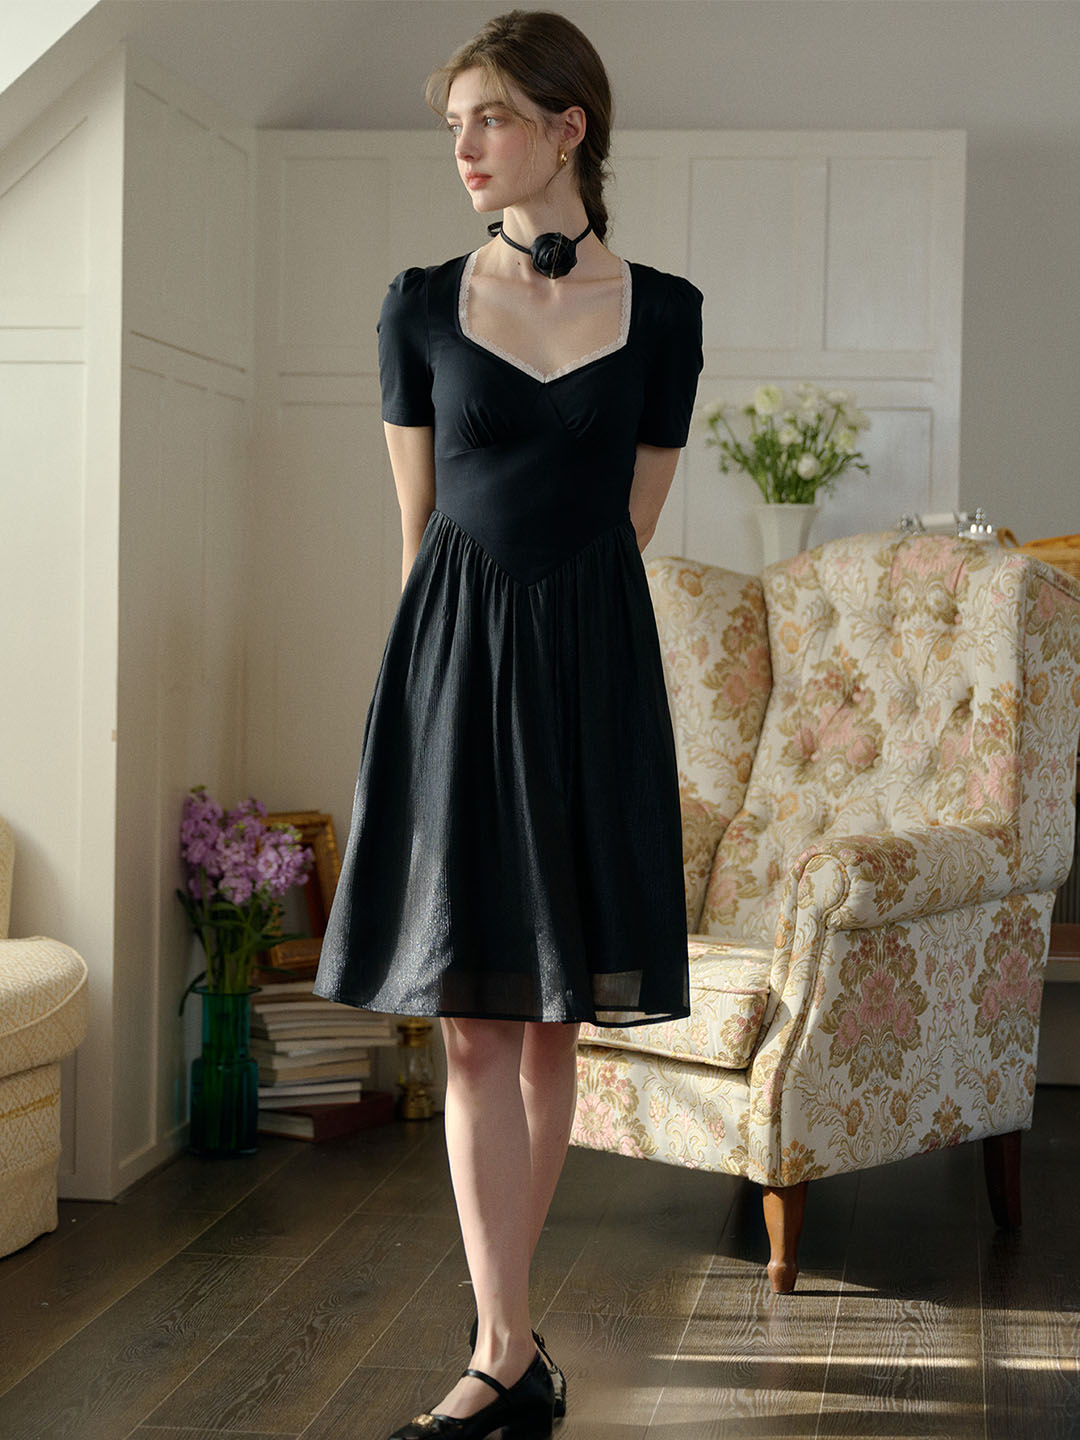 Viviana Color Block Lace & Rhinestone-Studded Collar Dress (No Rose Choker)